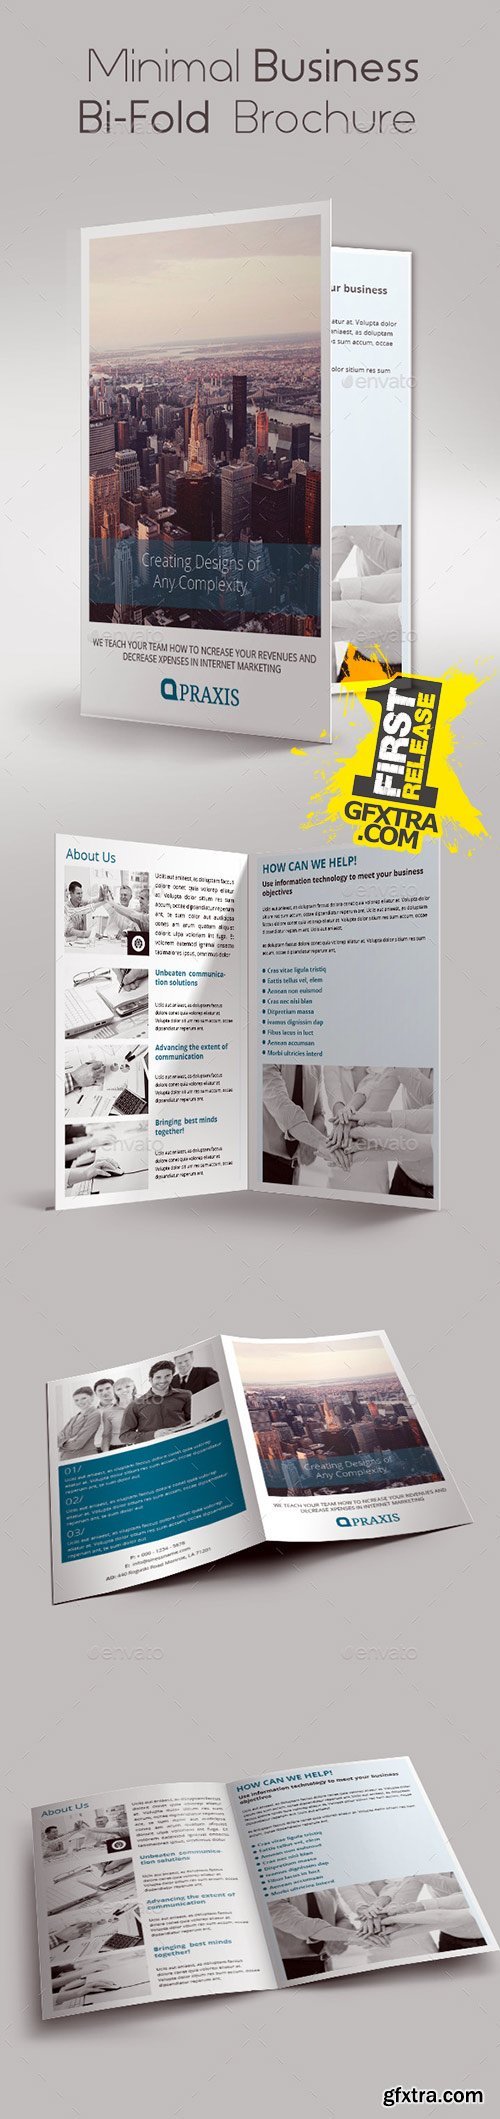 GraphicRiver - Minimal Business Bi-Fold Brochure 10516890